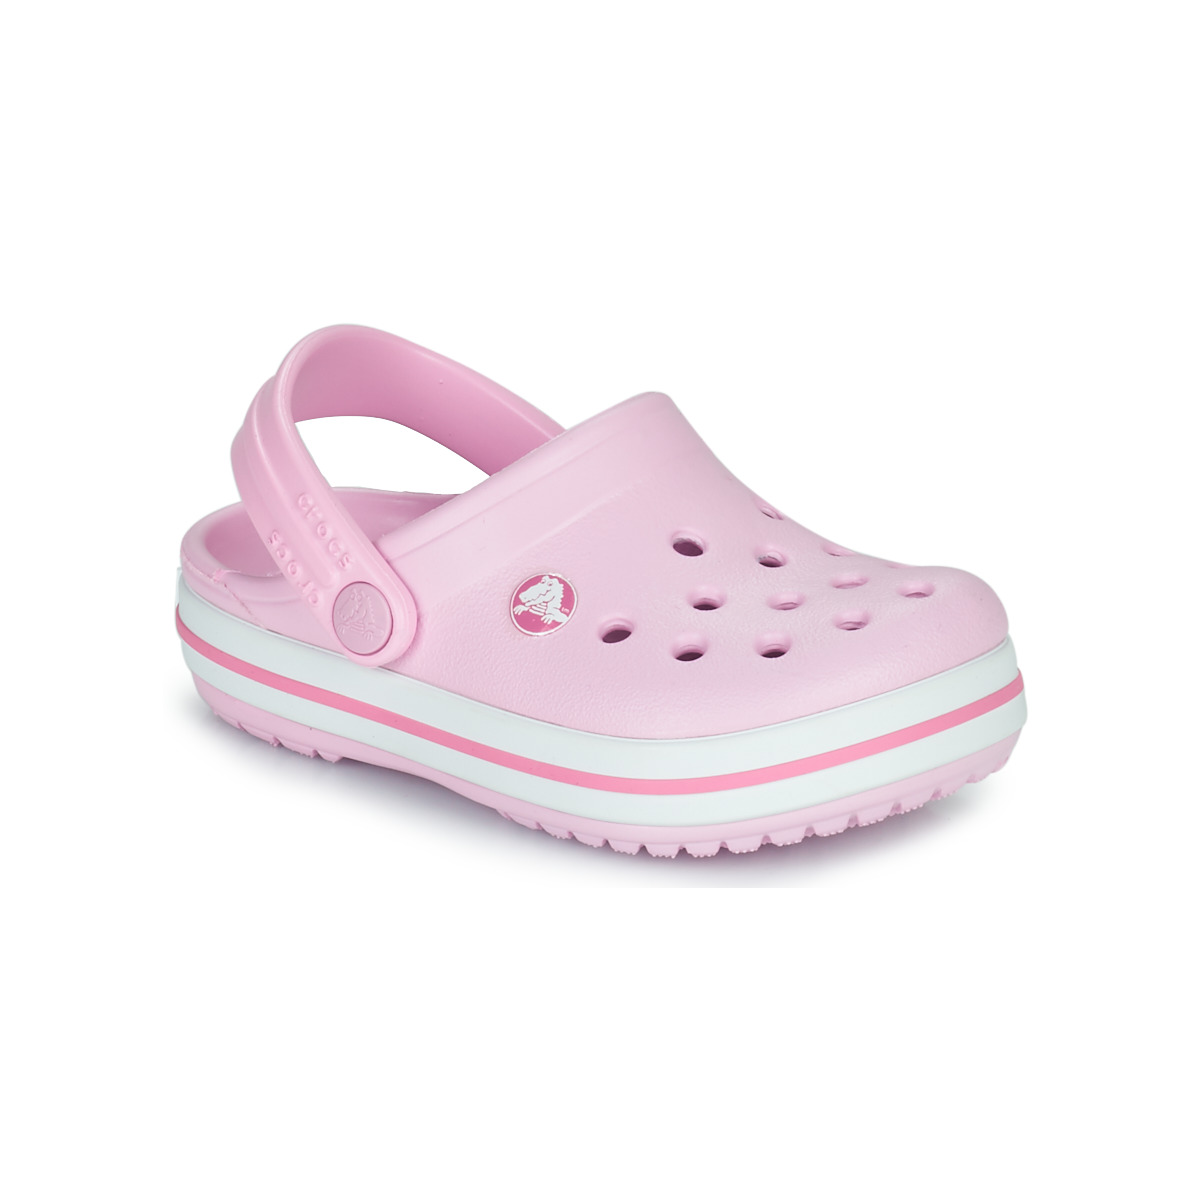 Shoes Girl Clogs Crocs CROCBAND CLOG T Pink